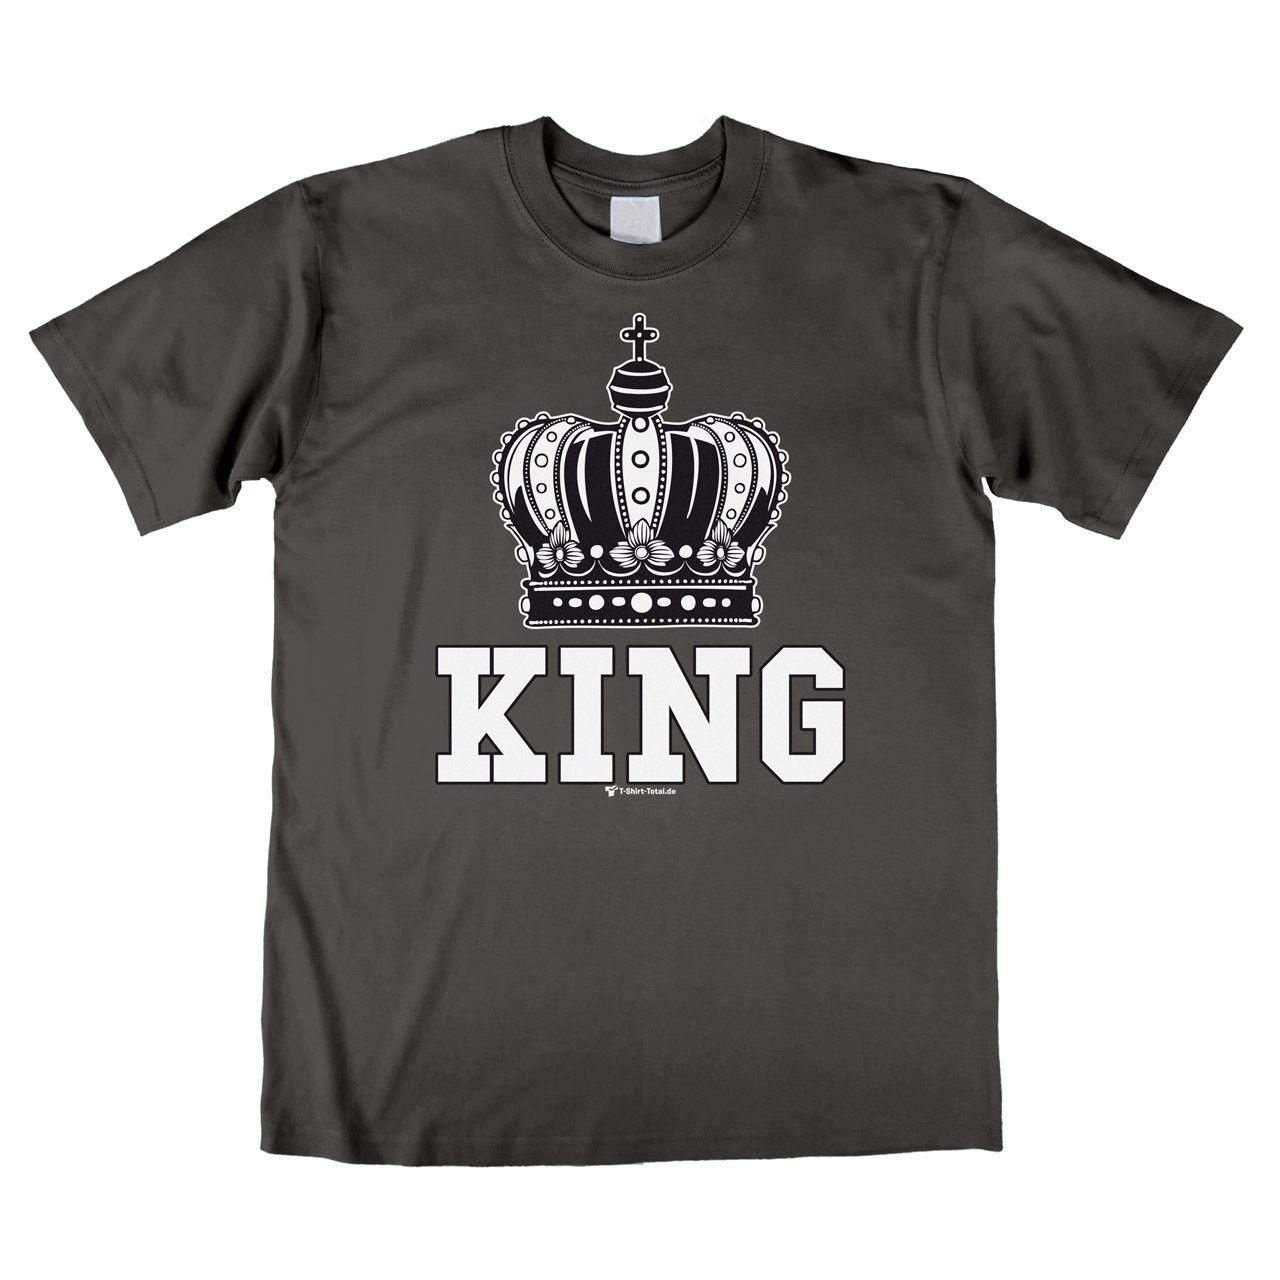 King Unisex T-Shirt grau Large